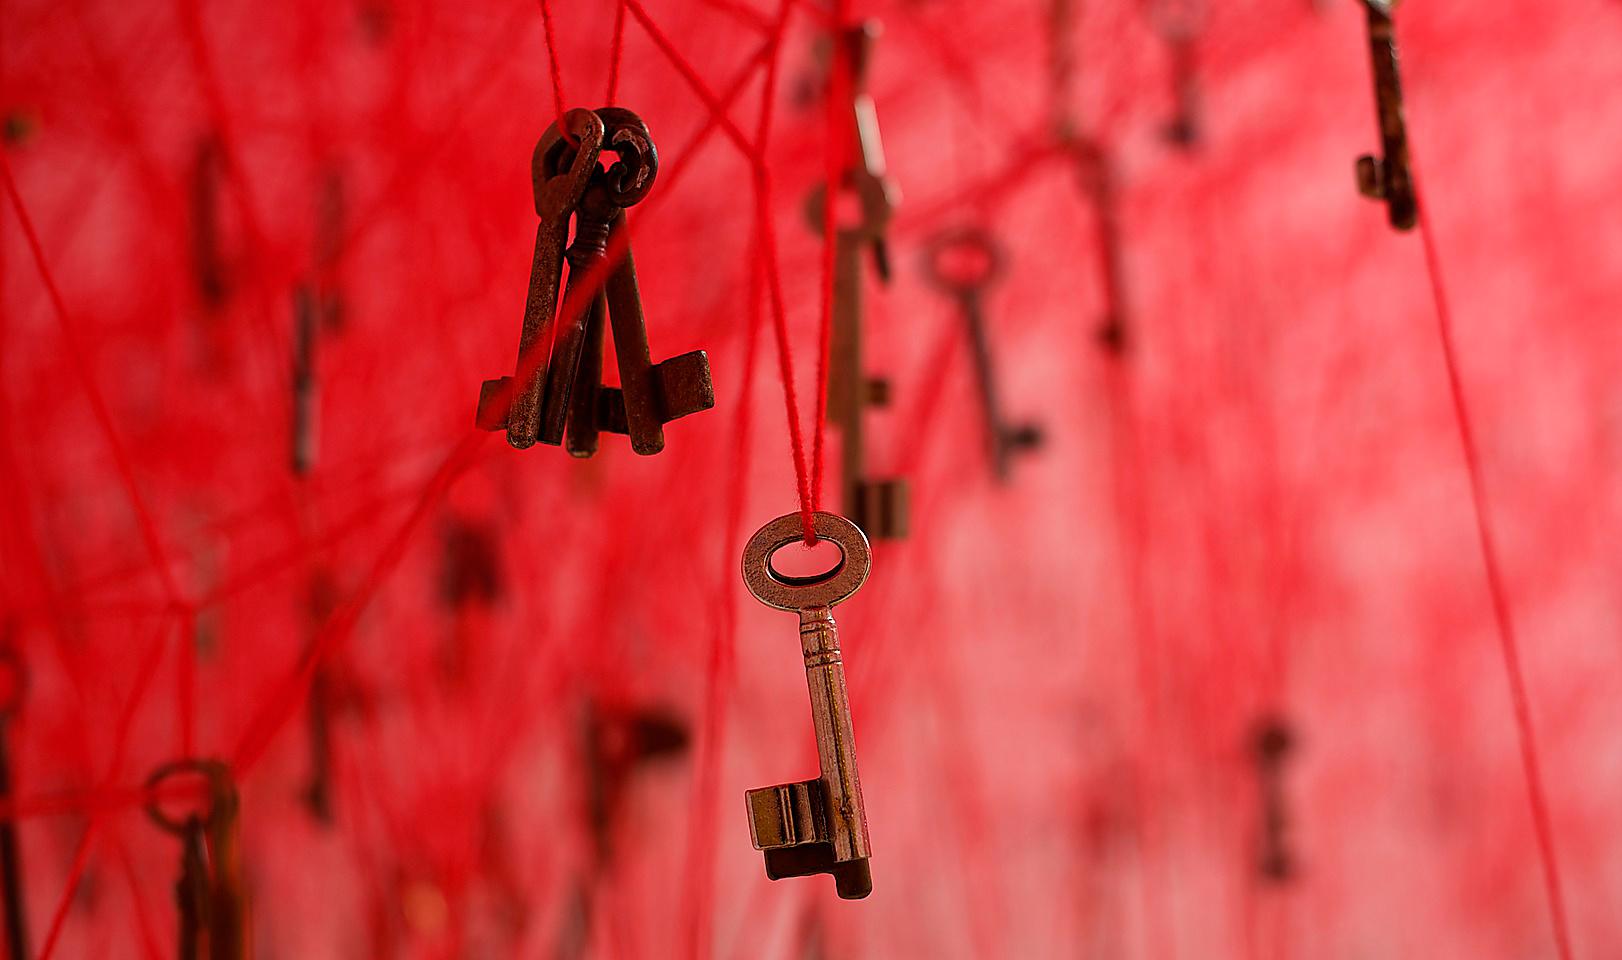 Chiharu Shiota: ”The Key in the Hand”, 2015.  Insamlade nycklar, röd tråd. Foto: Sara Sagui, Courtesy by la Biennale di Venezia